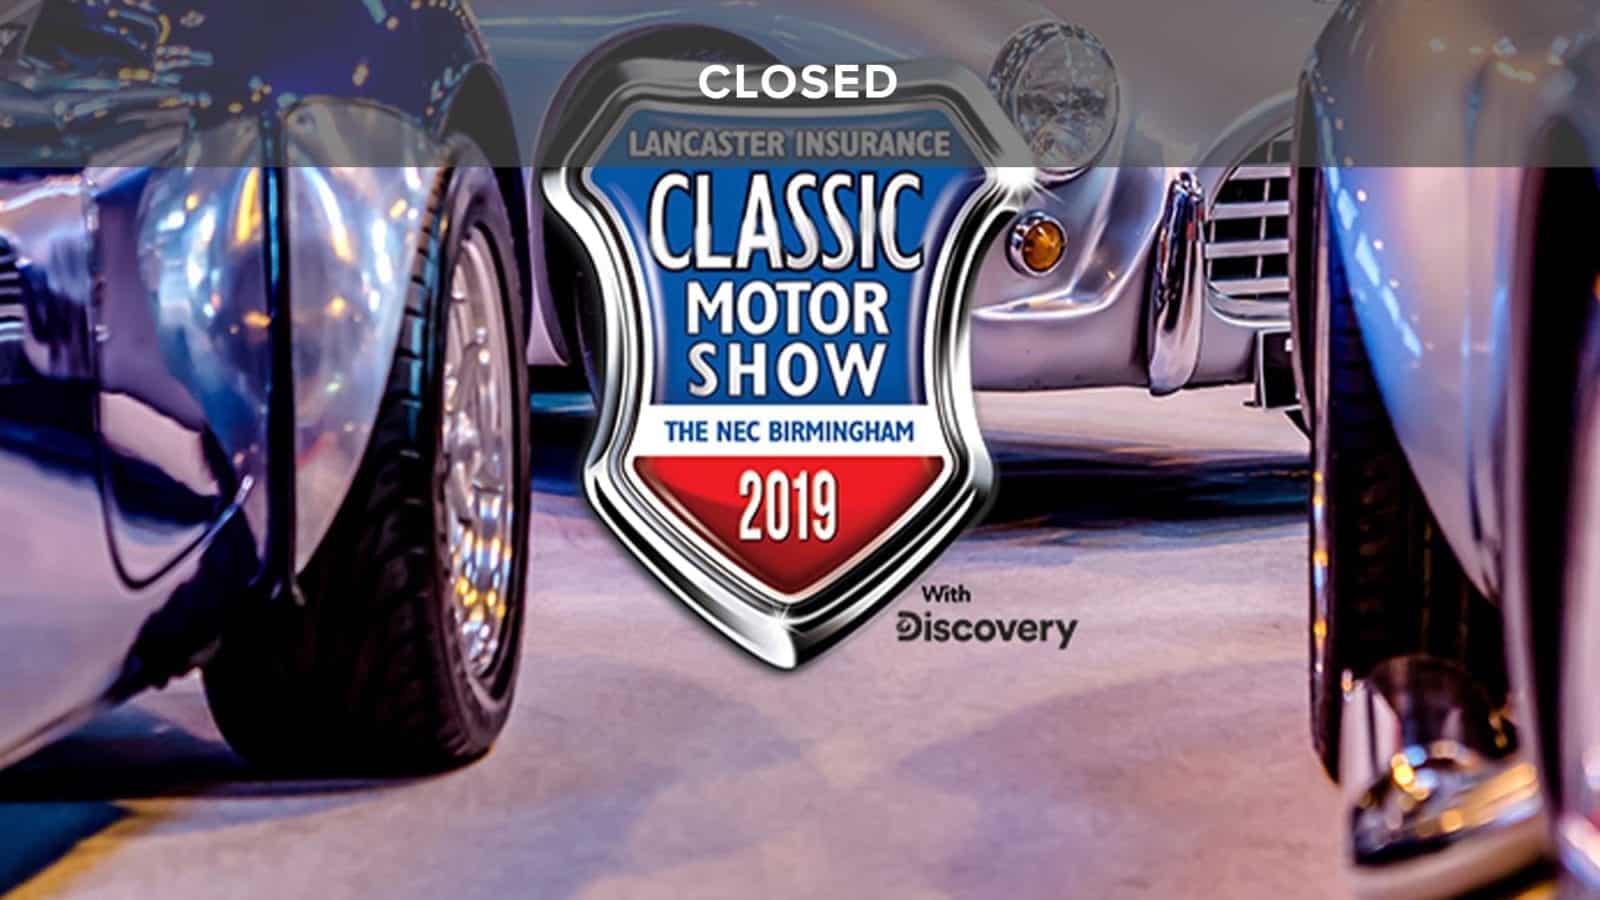 Classic Motor Show closed